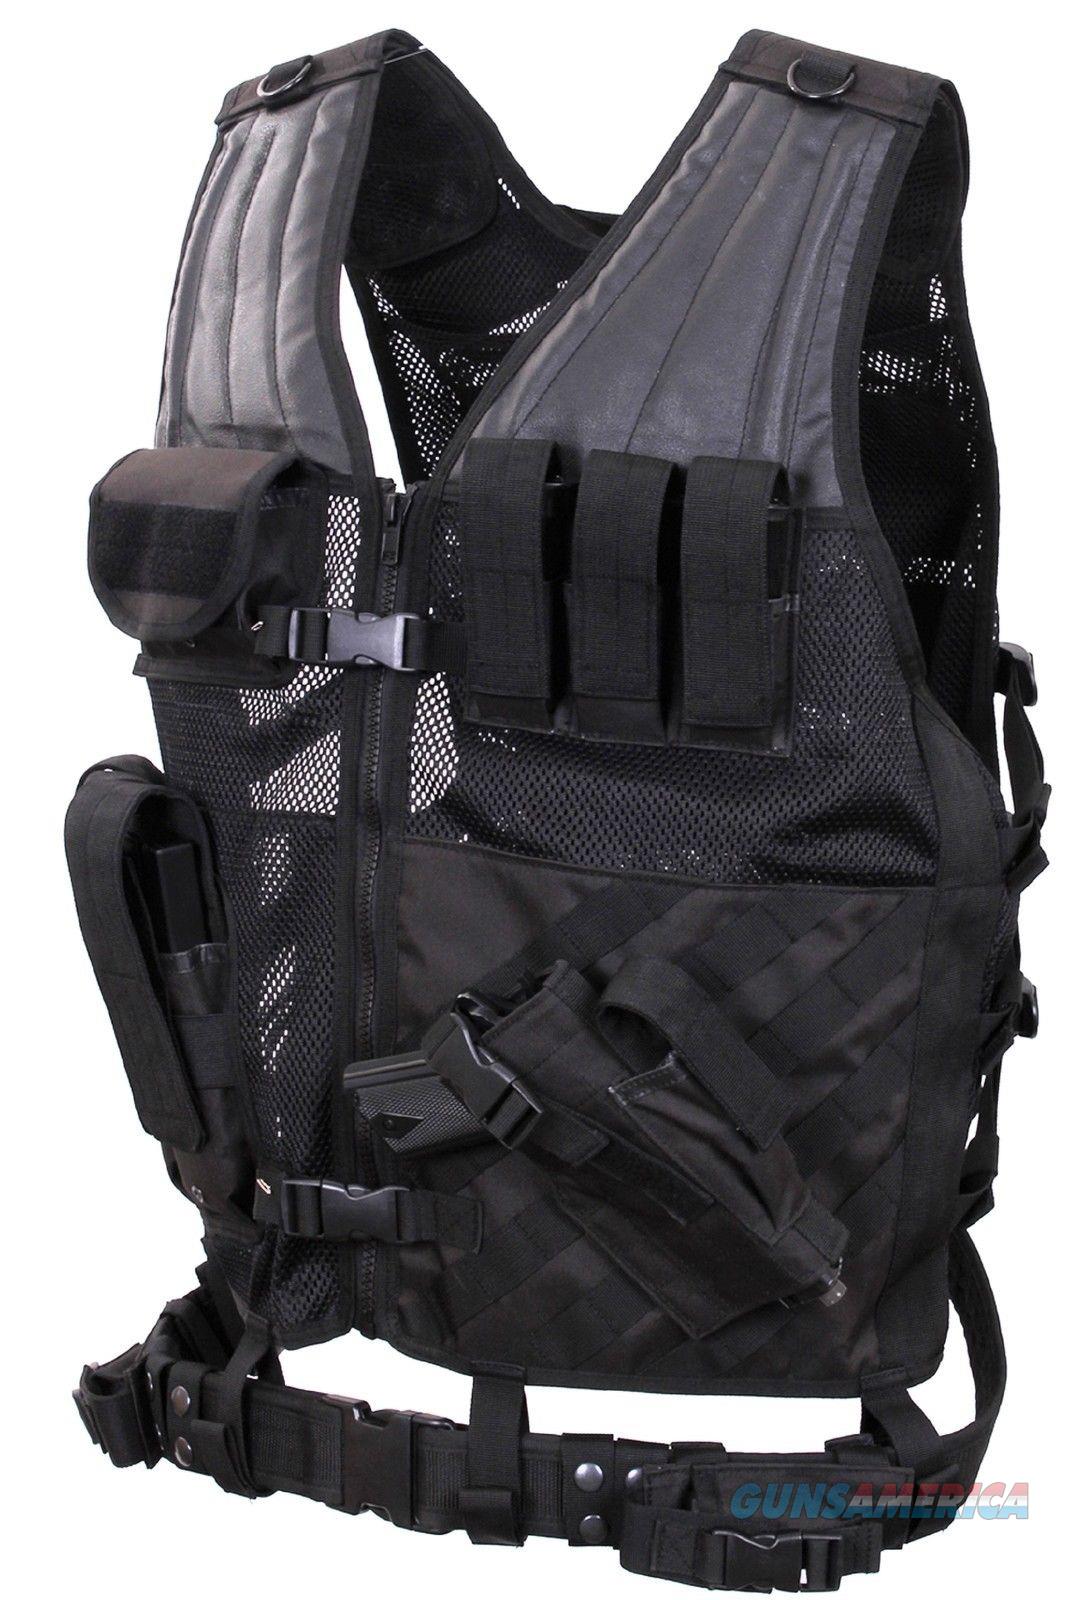 ROTHCO Tactical Cross Draw Vest #64... for sale at Gunsamerica.com ...